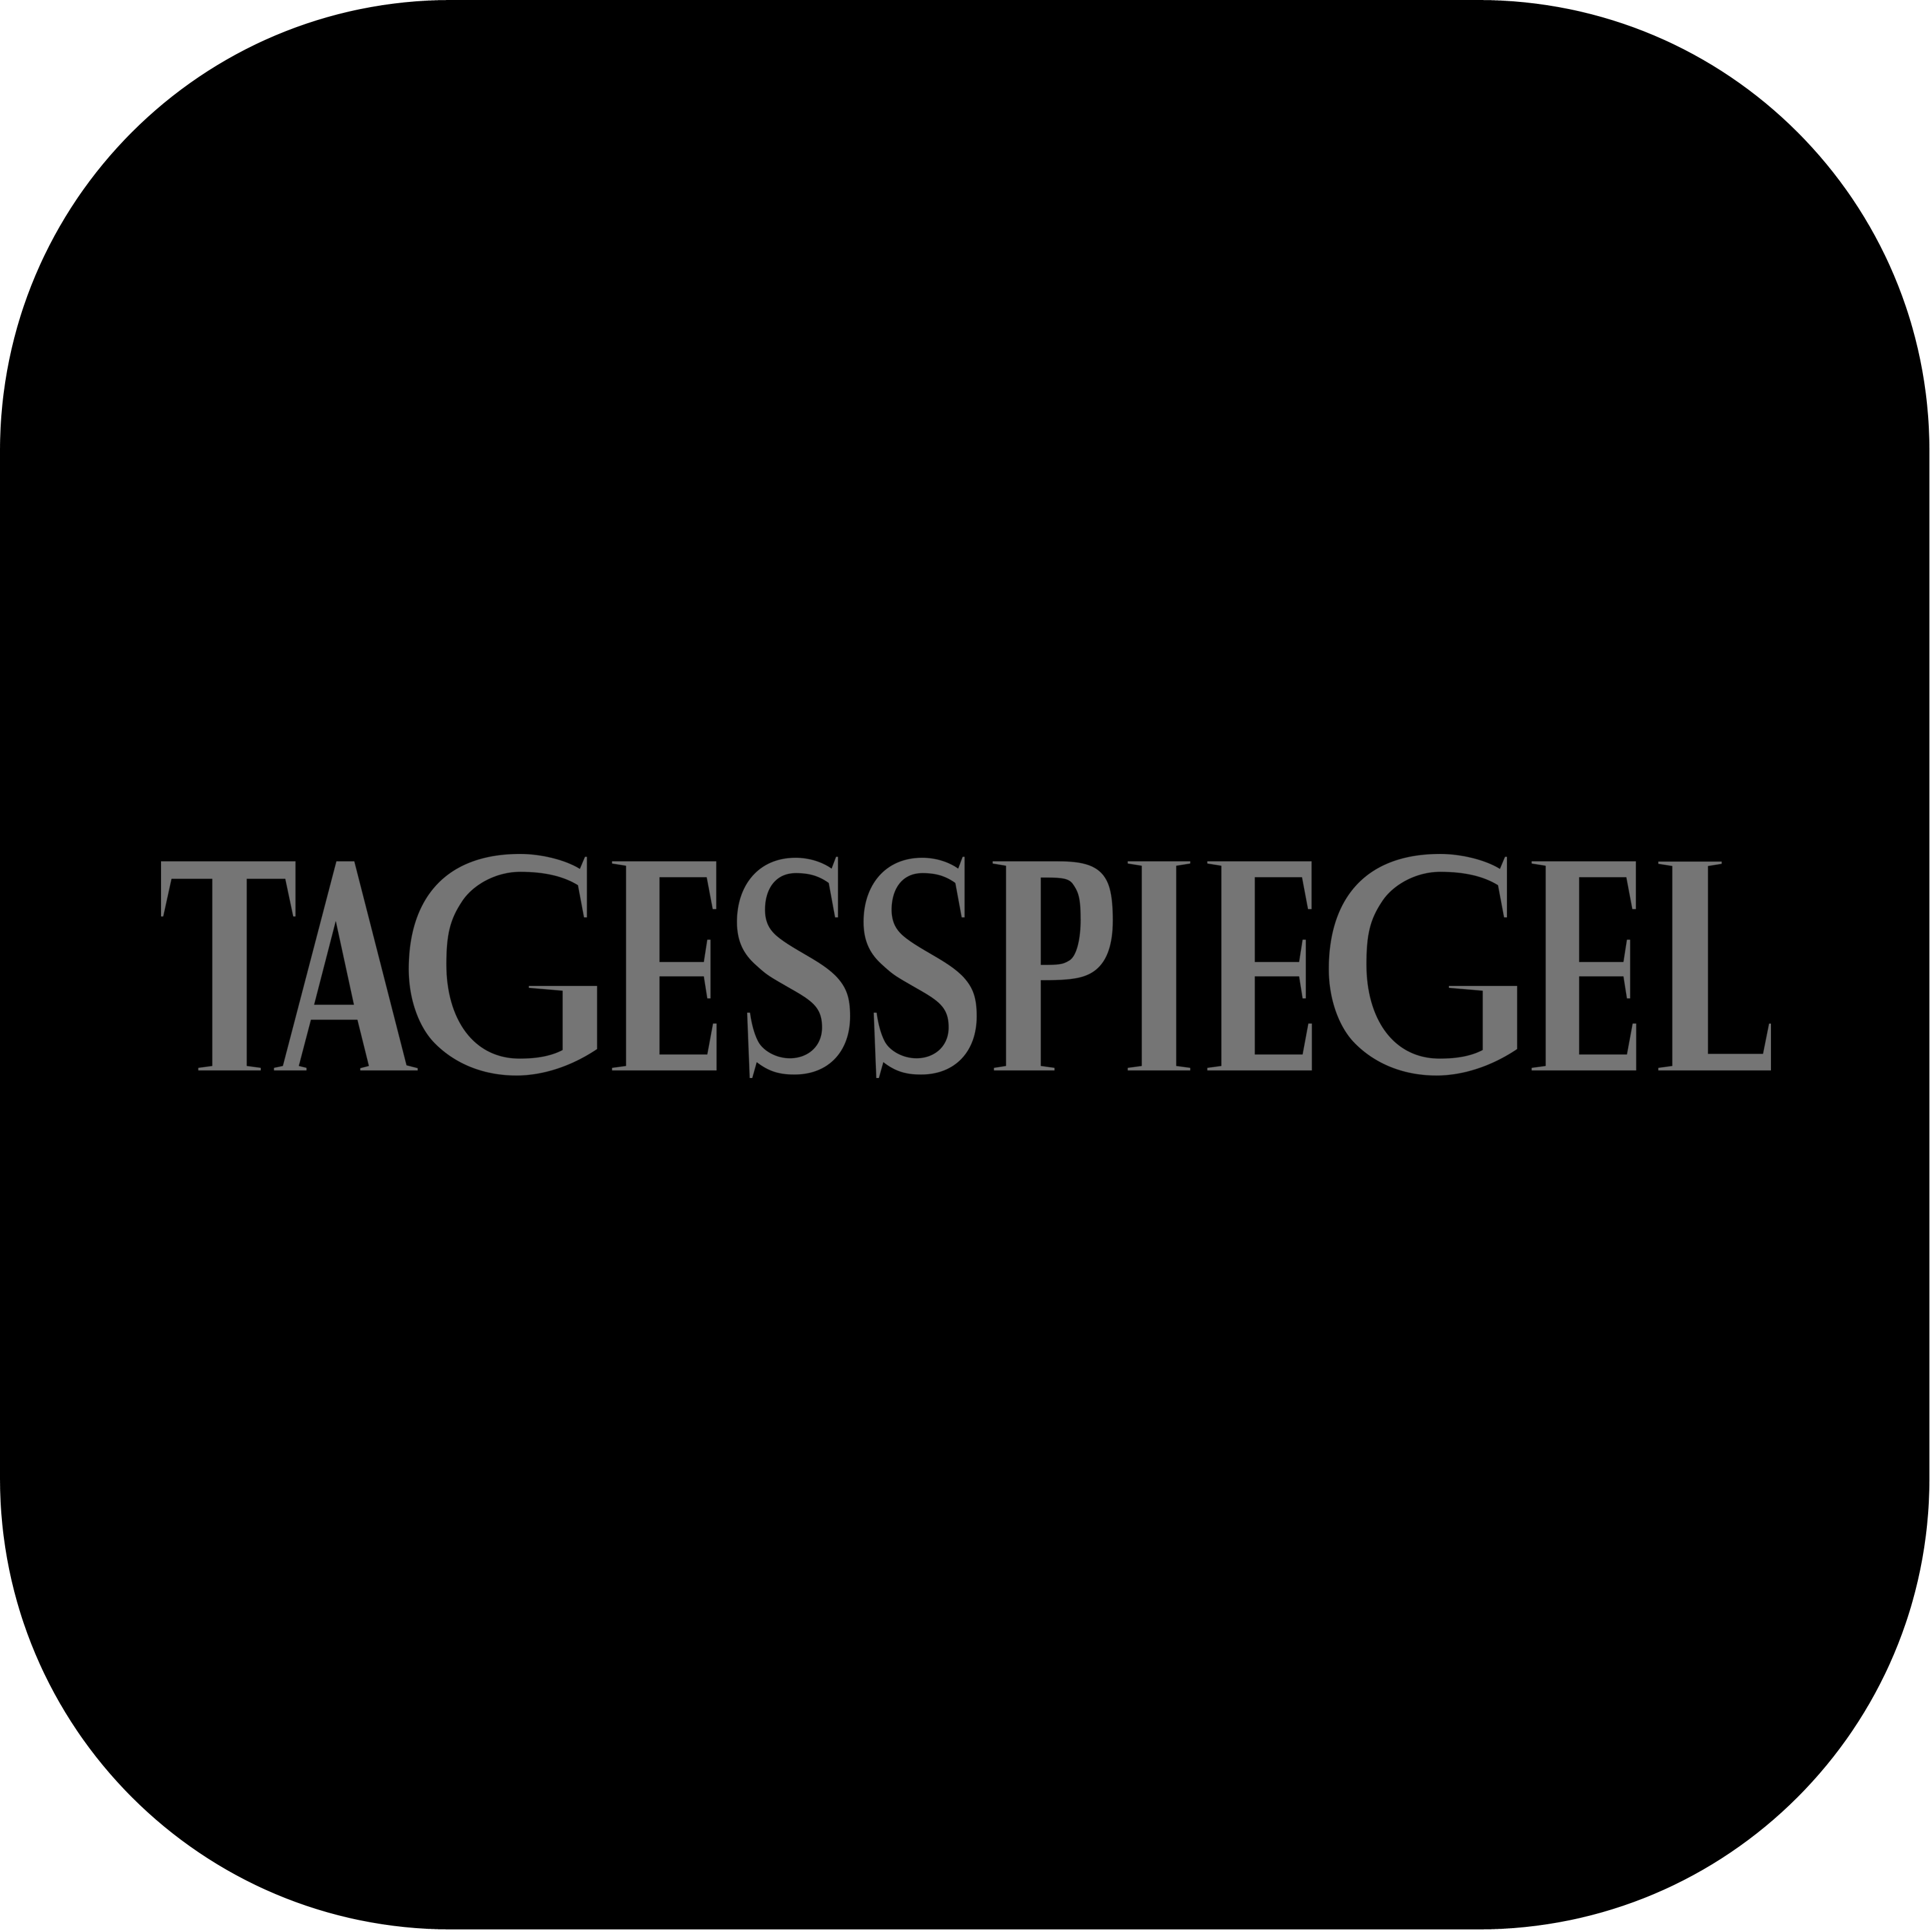 Tagesspiegel Logo 2022 Transparent Photo